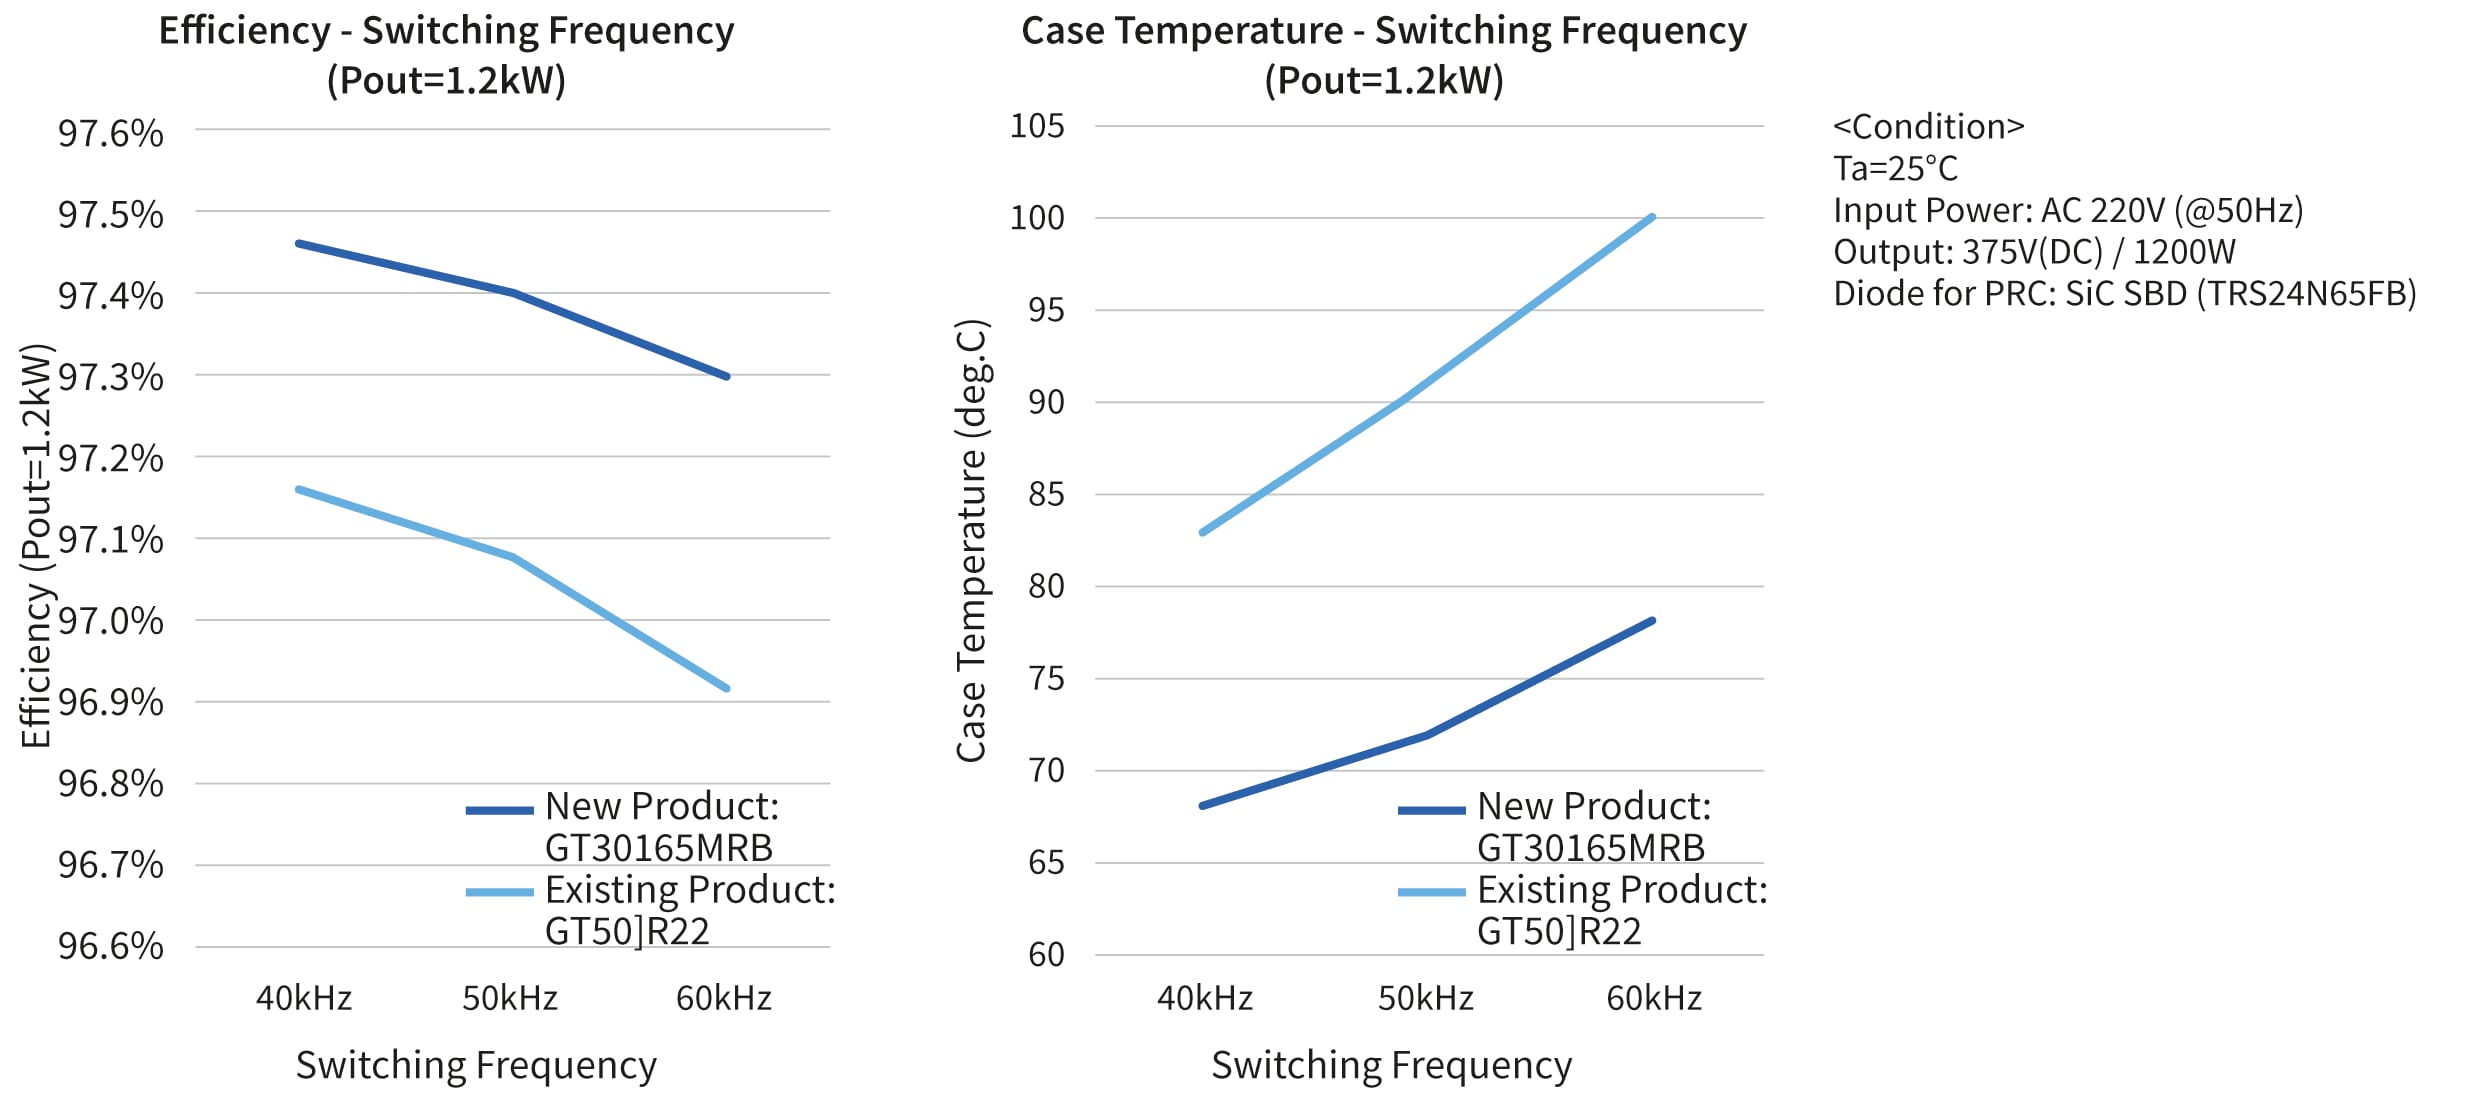 Figure 2. Efficiency and case temperature